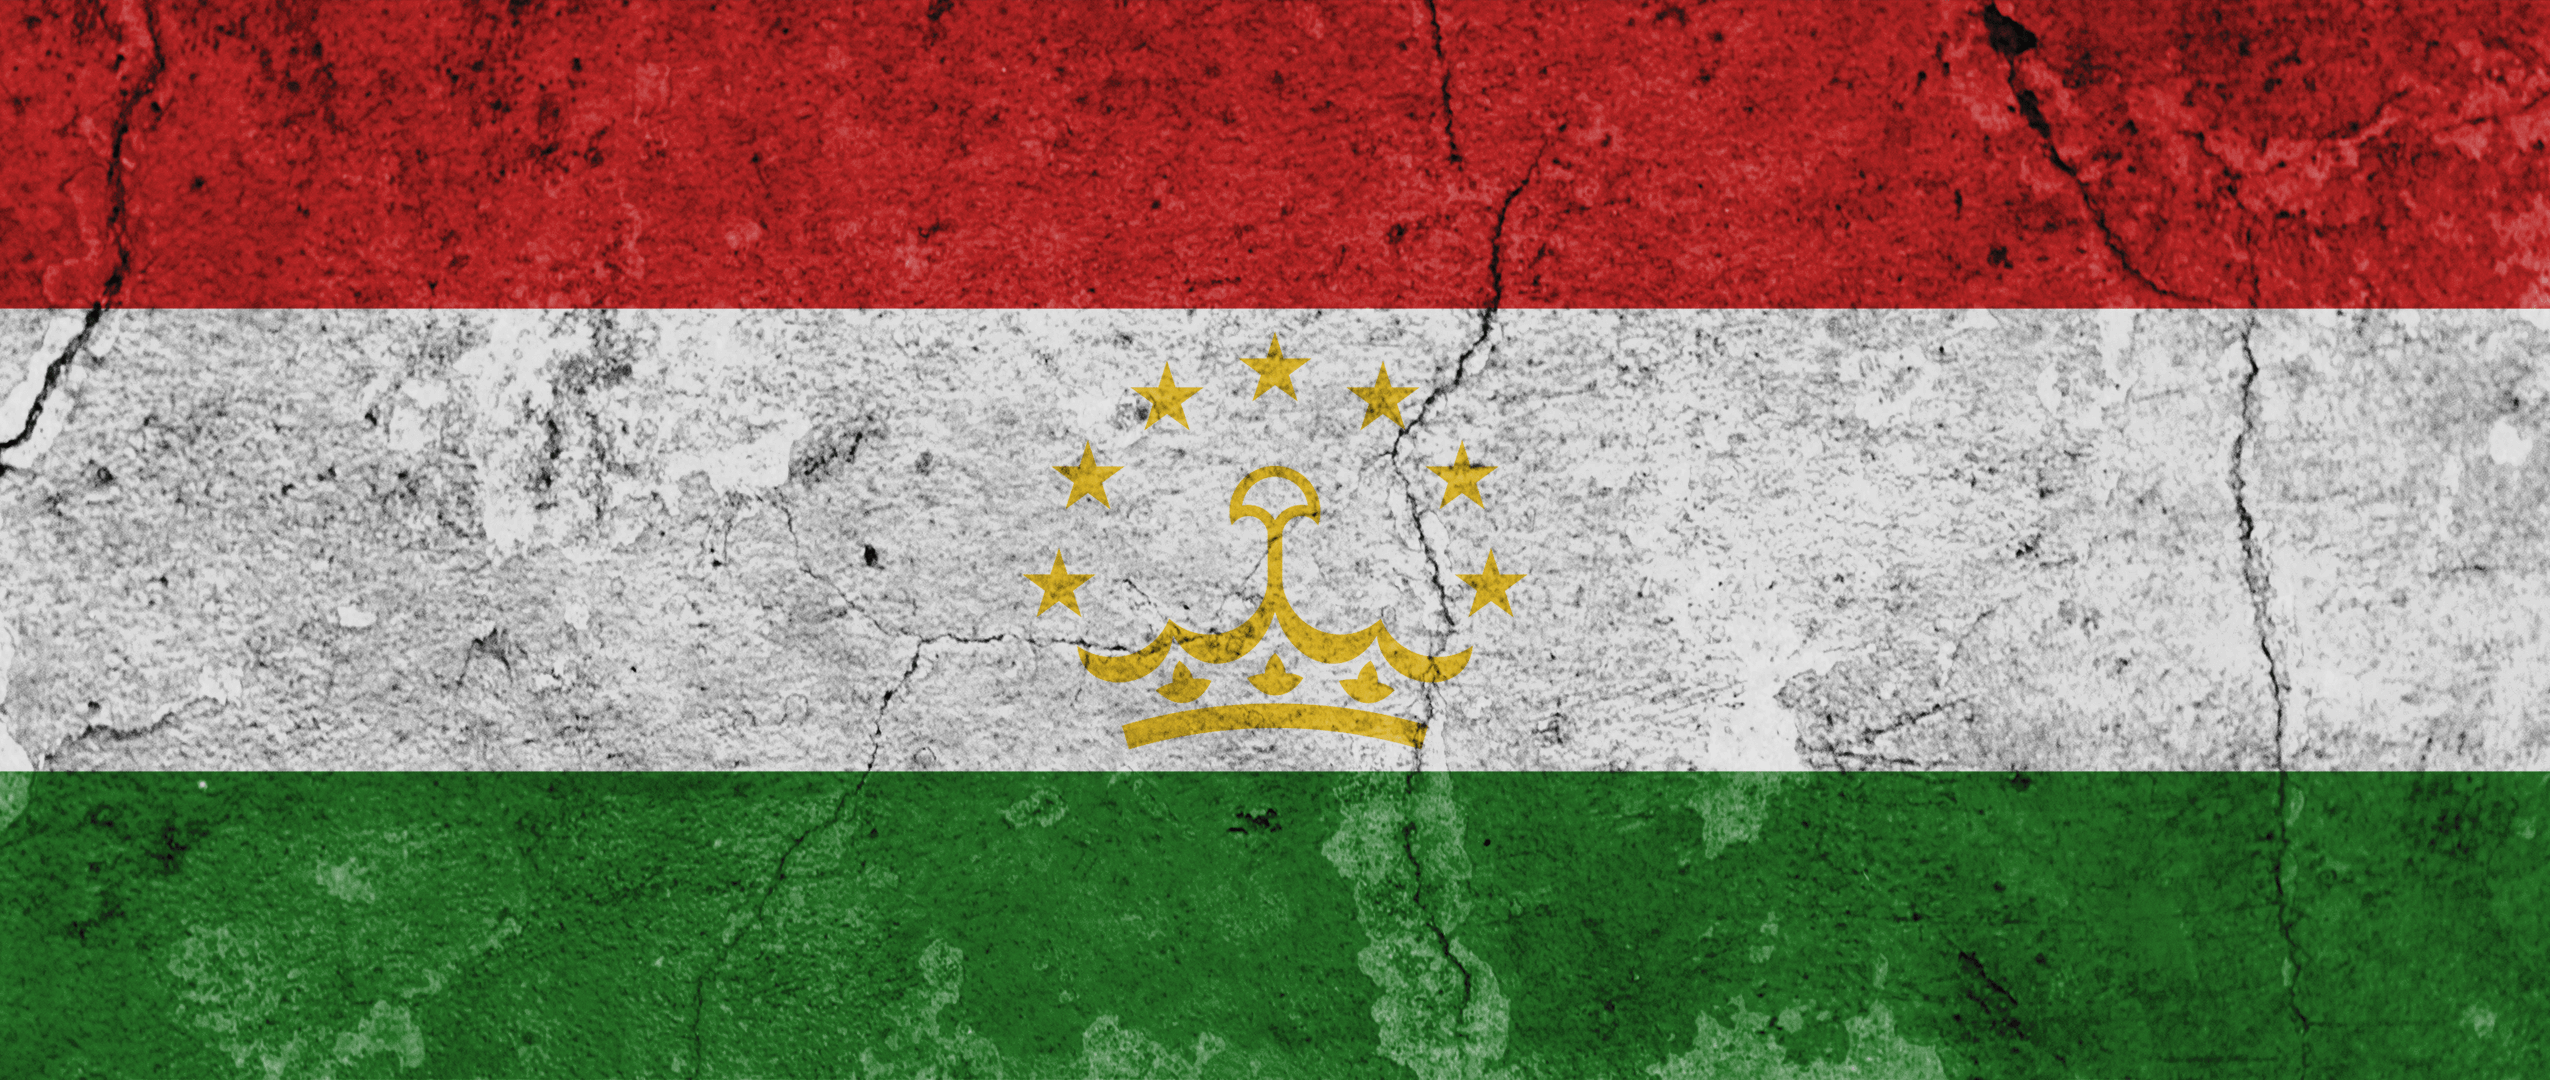 Repression and Persecution Under Tajikistan’s Authoritarian Regime